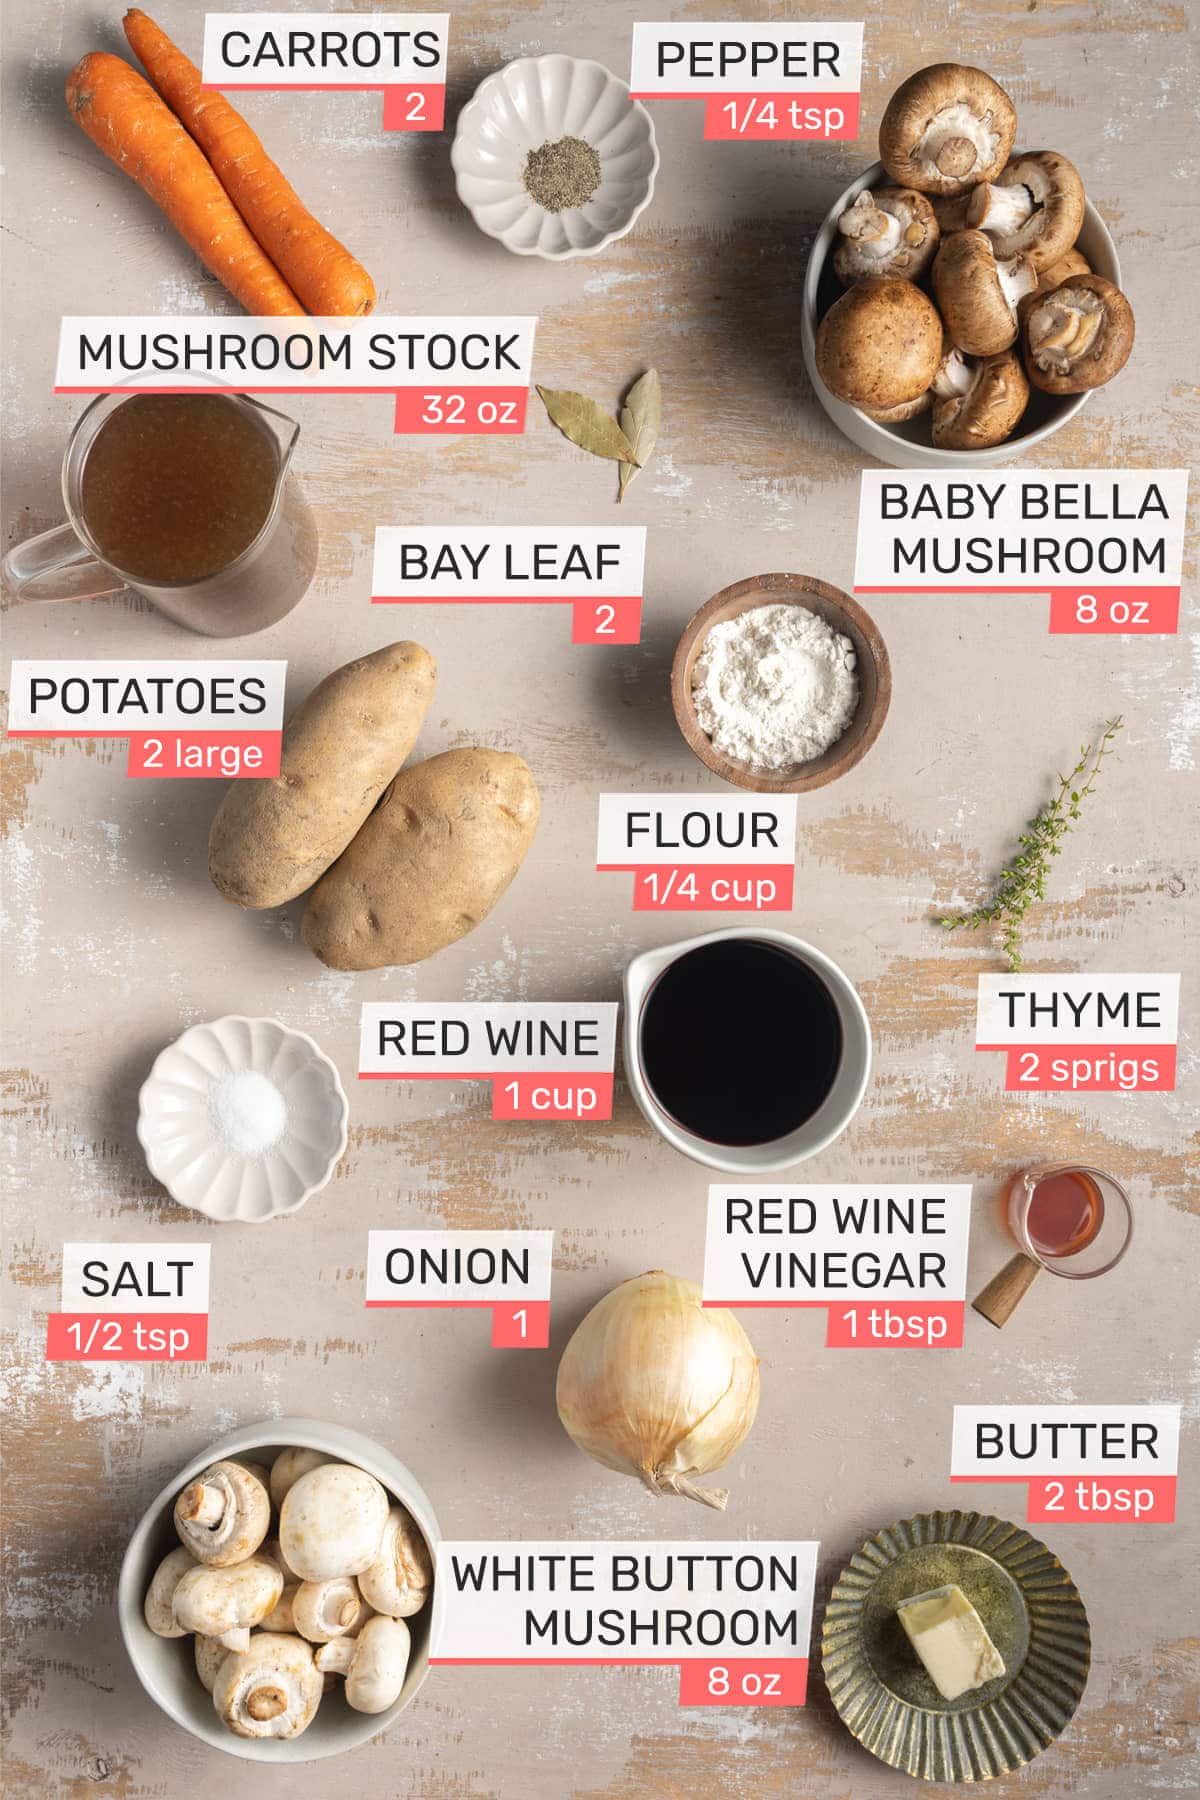 All ingredients for Mushroom Stew - onion, red wine, thyme, flour, mushrooms, butter, potatoes, carrots, bay leaves, red wine vinegar, mushroom stock, salt, pepper